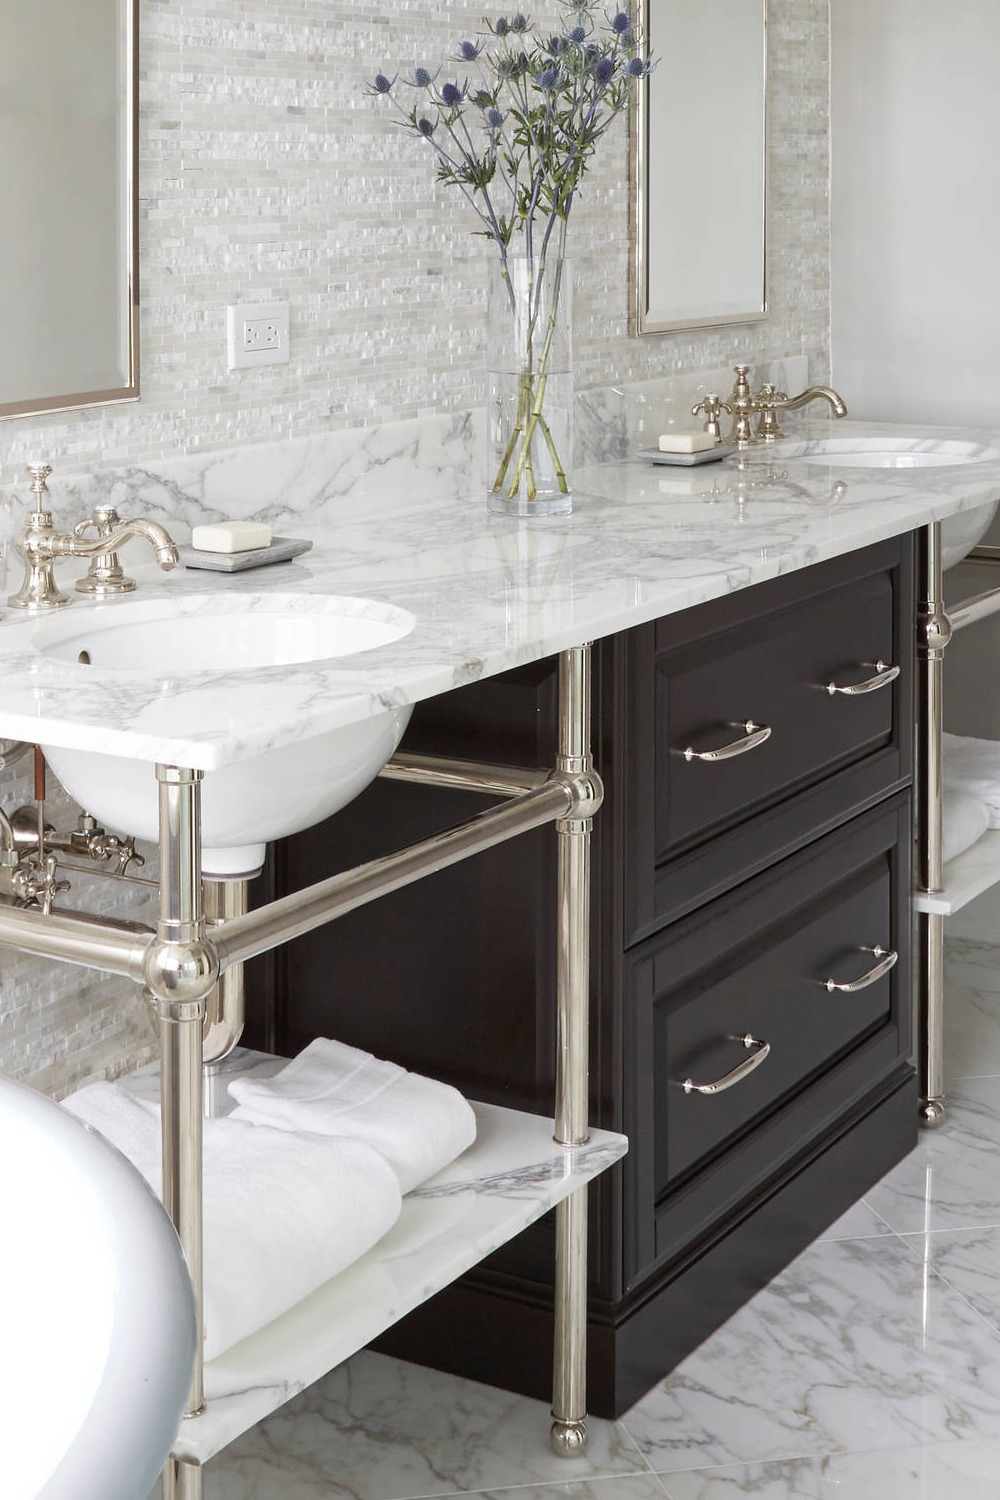 Calacatta Gold Marble Floor Tiles Dark Wood Cabinets Countertops Bathroom Vanities Split Faced And Stacked Statuary Tile